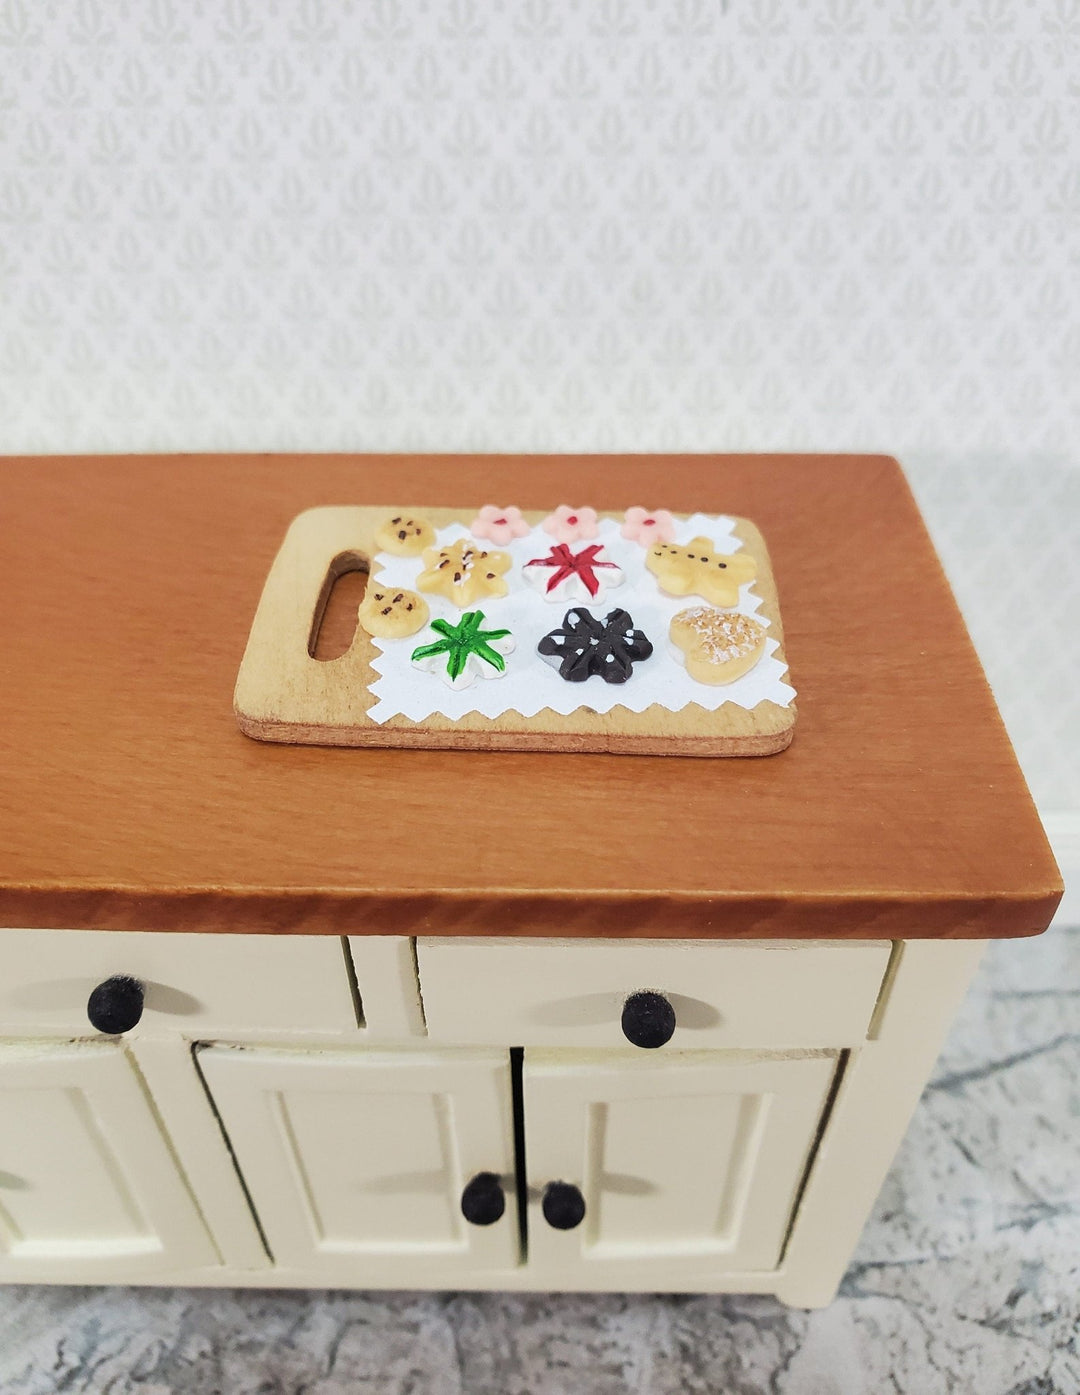 Dollhouse Cookies on a Cutting Board Dessert 1:12 Scale Miniature Food - Miniature Crush